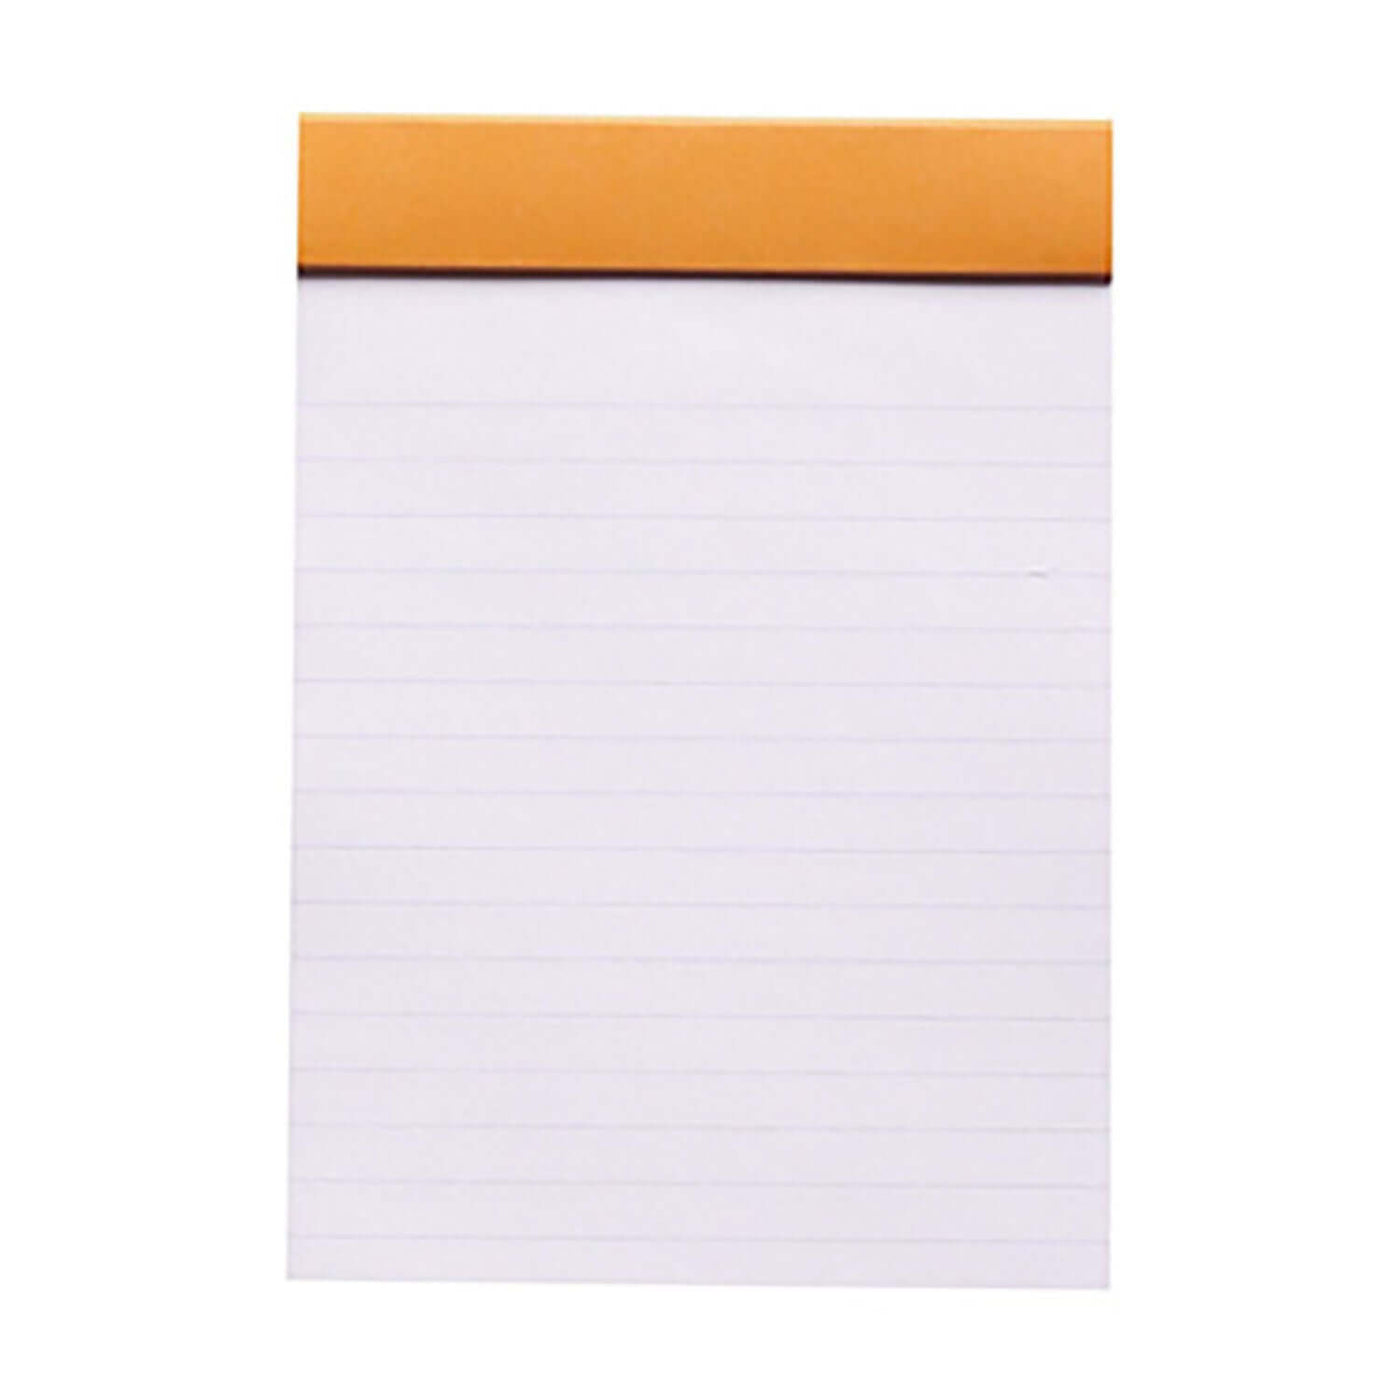 Rhodia Basics Notepad, Orange - Top Stapled 17